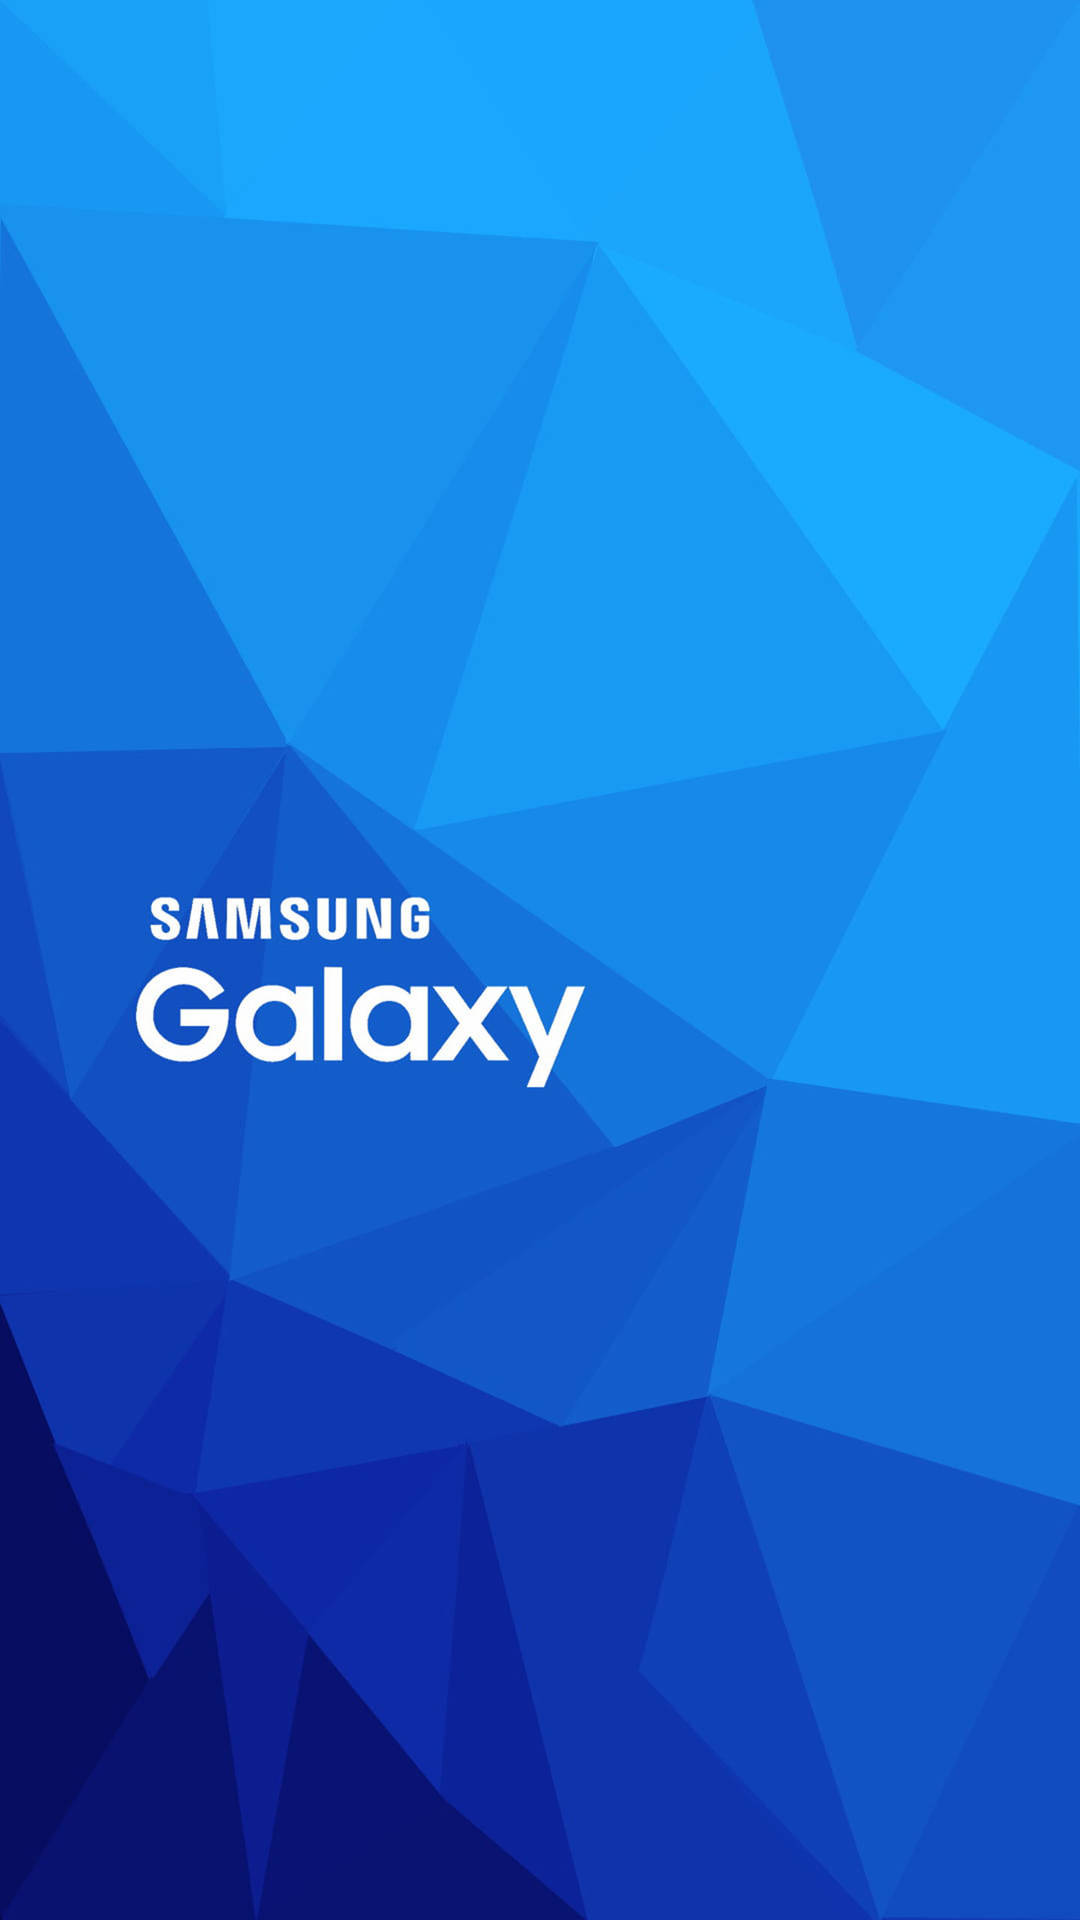 Samsung Galaxy Blue Low Poly Art Background